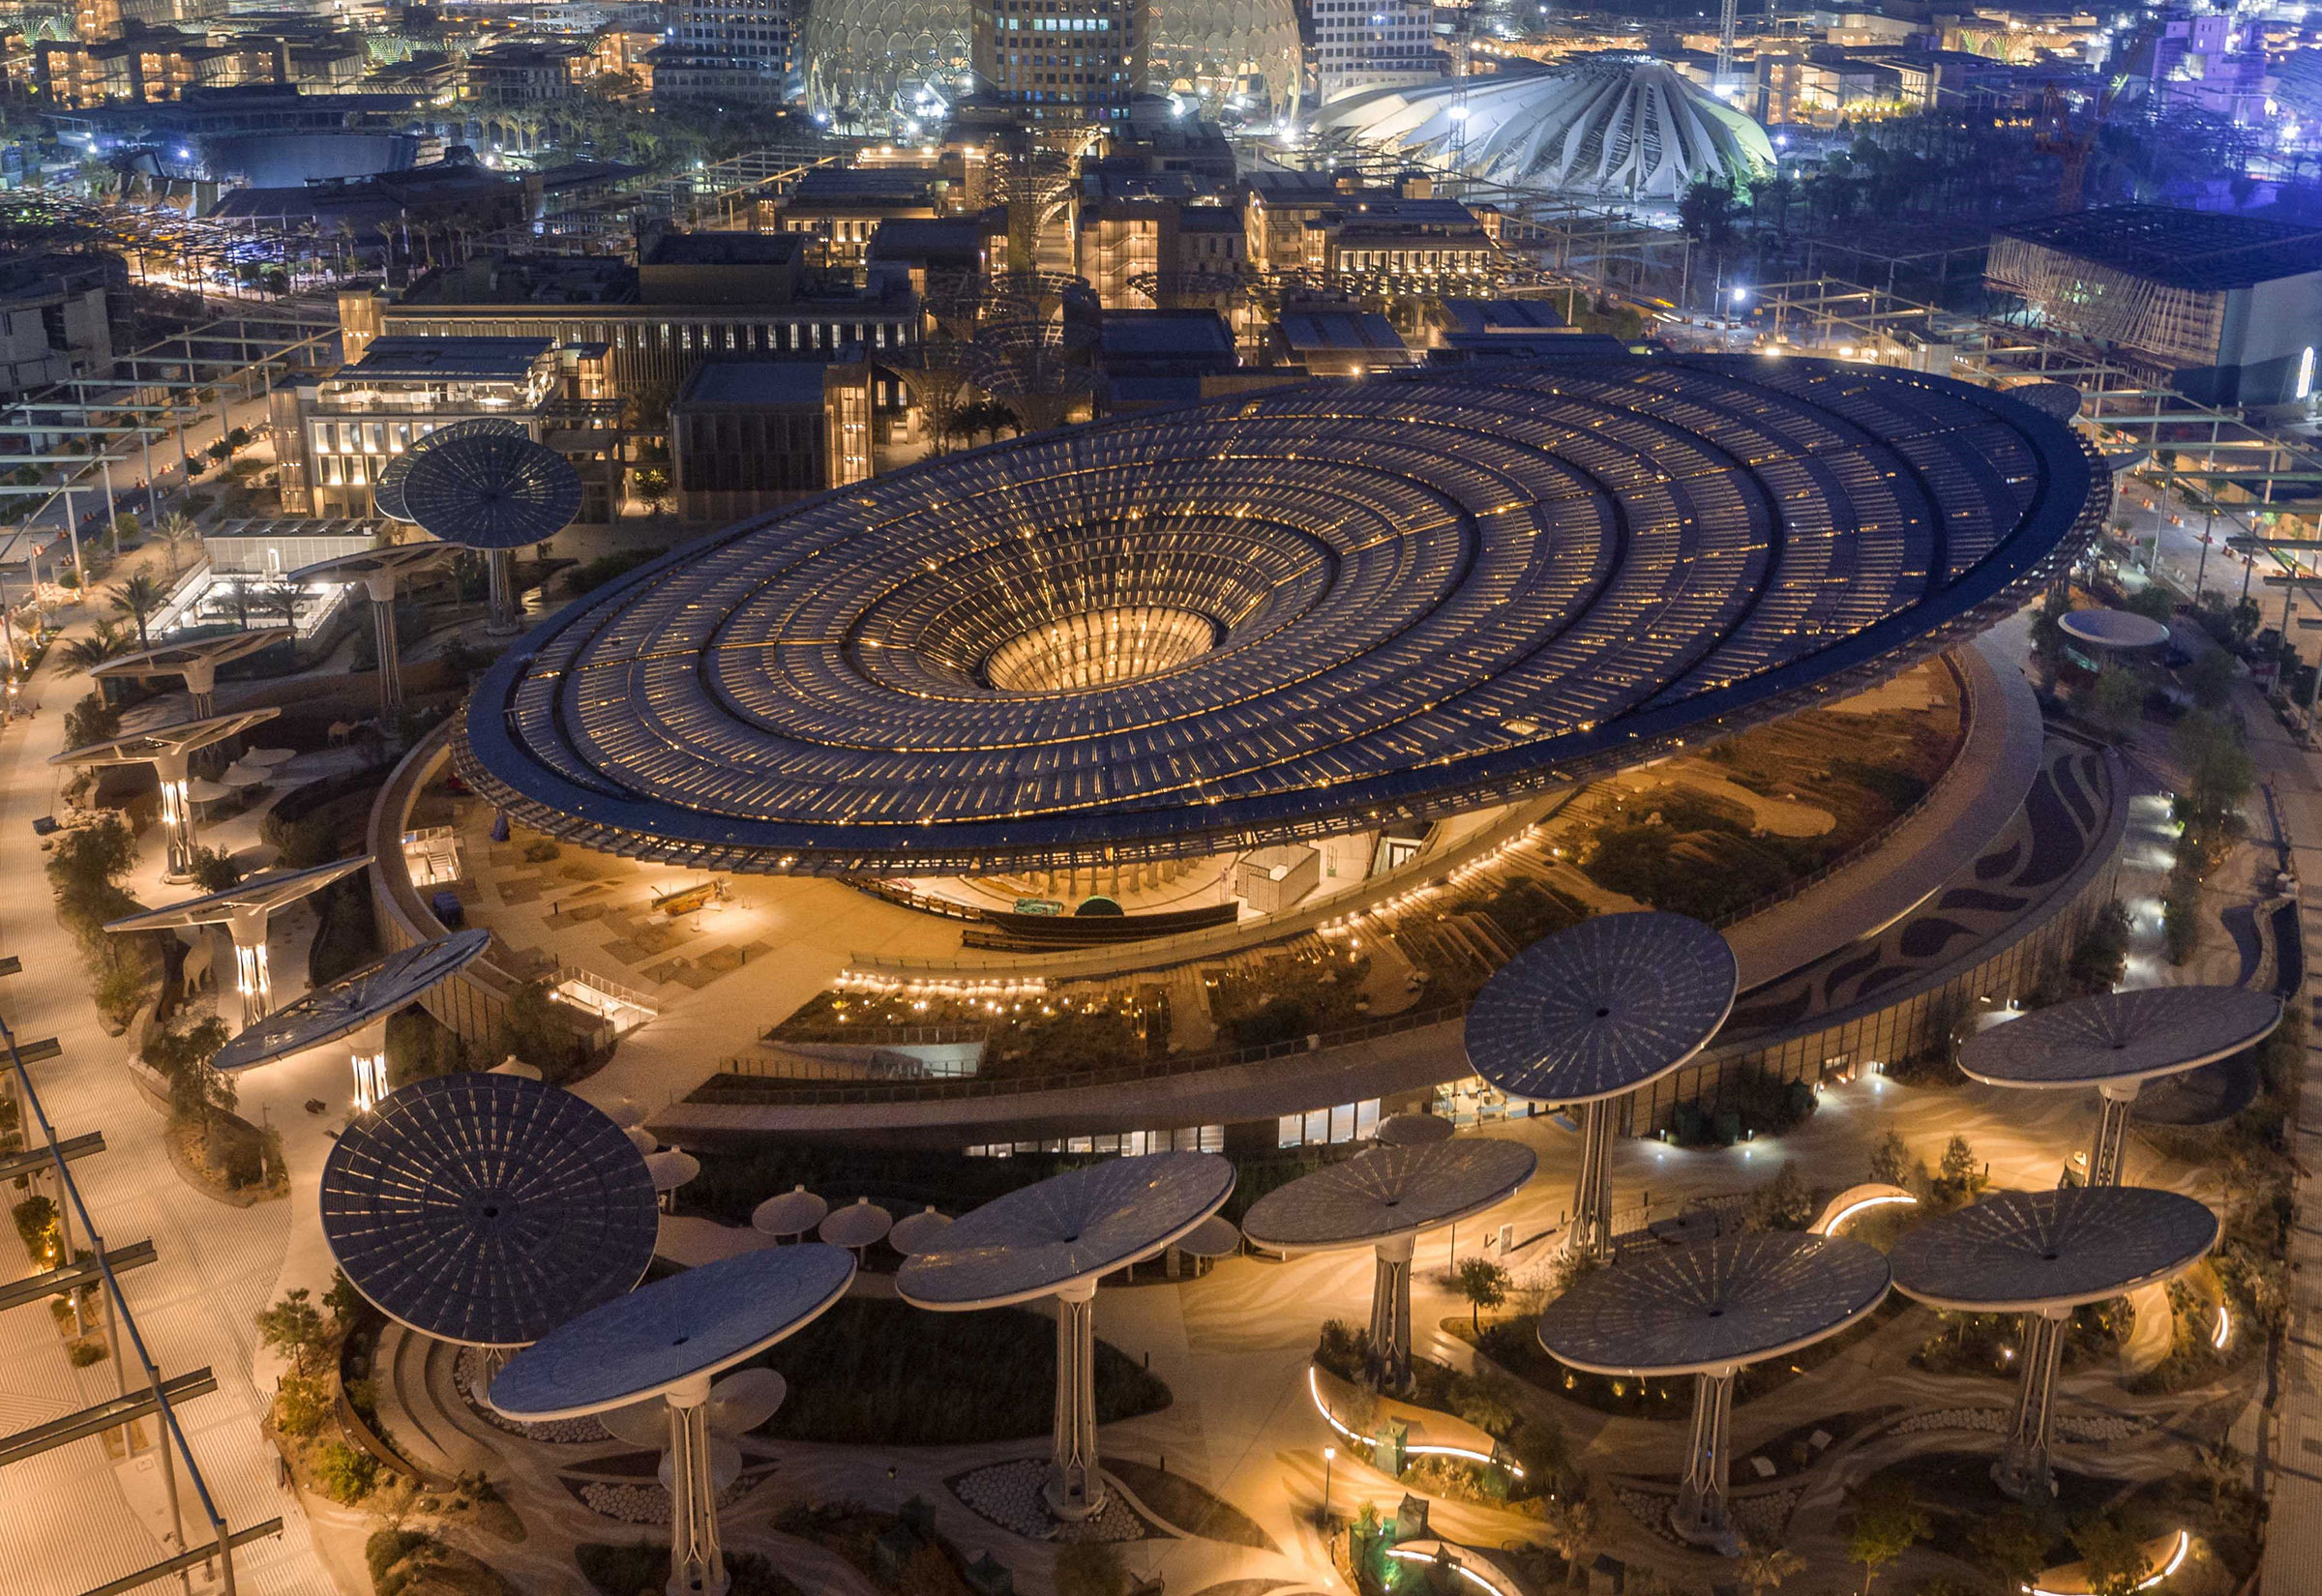 The Sustainability Pavilion at Expo 2020 Dubai. (Courtesy Expo 2020 Dubai)